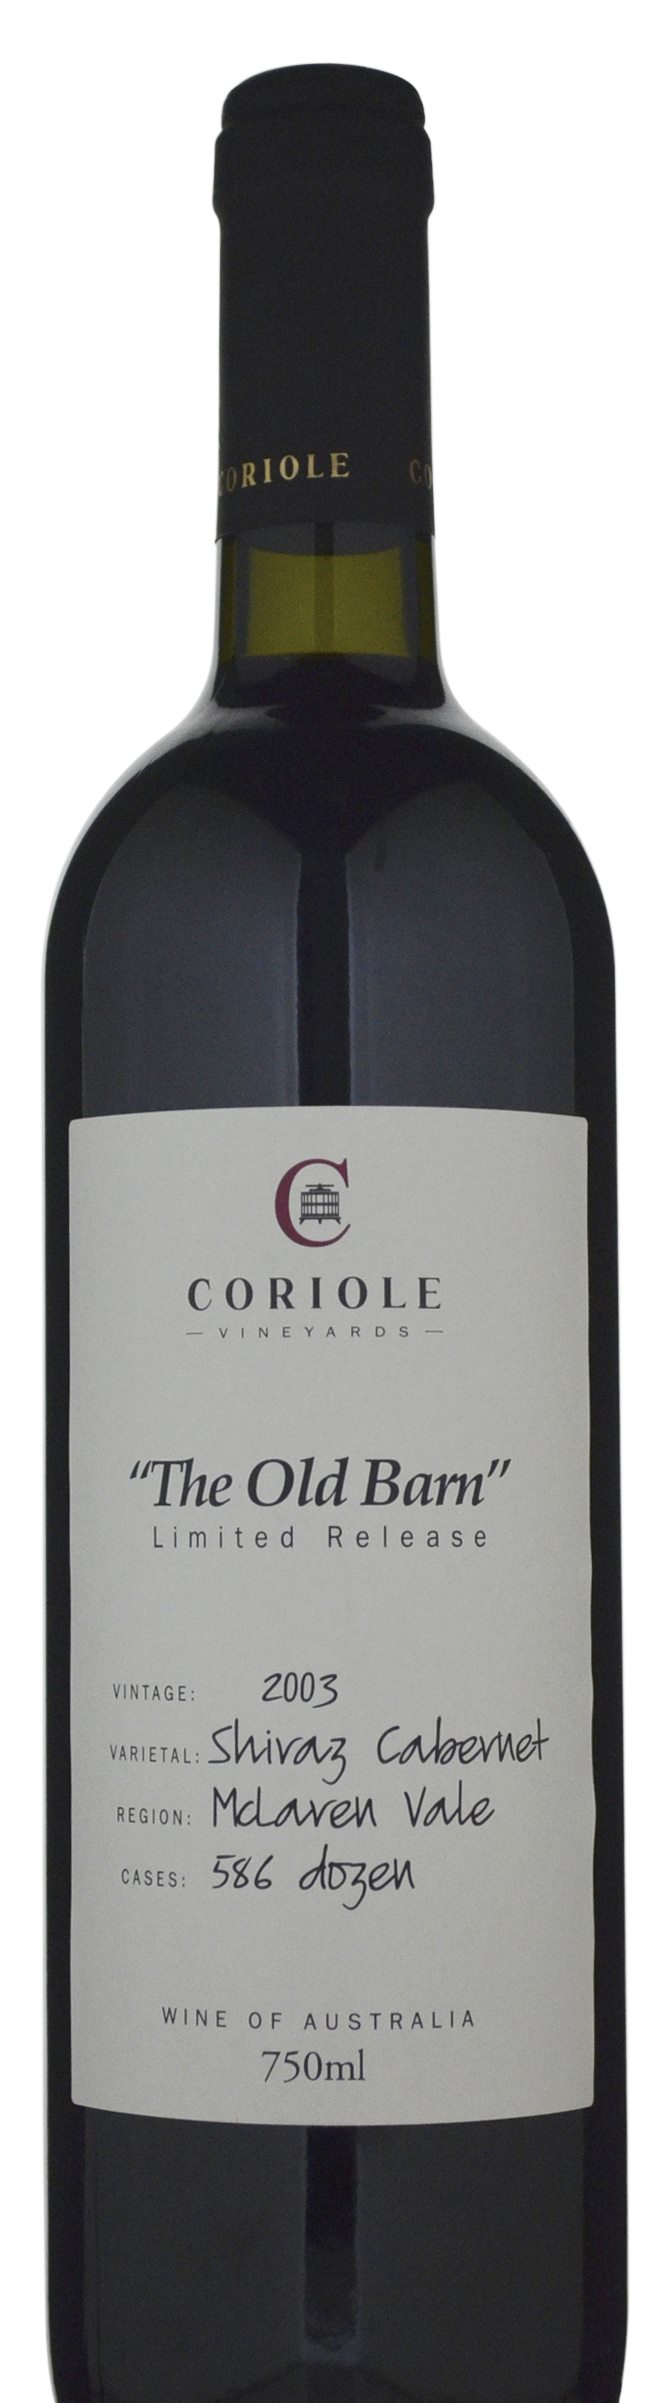 Coriole Vineyards The Old Barn Shiraz Cabernet 2003